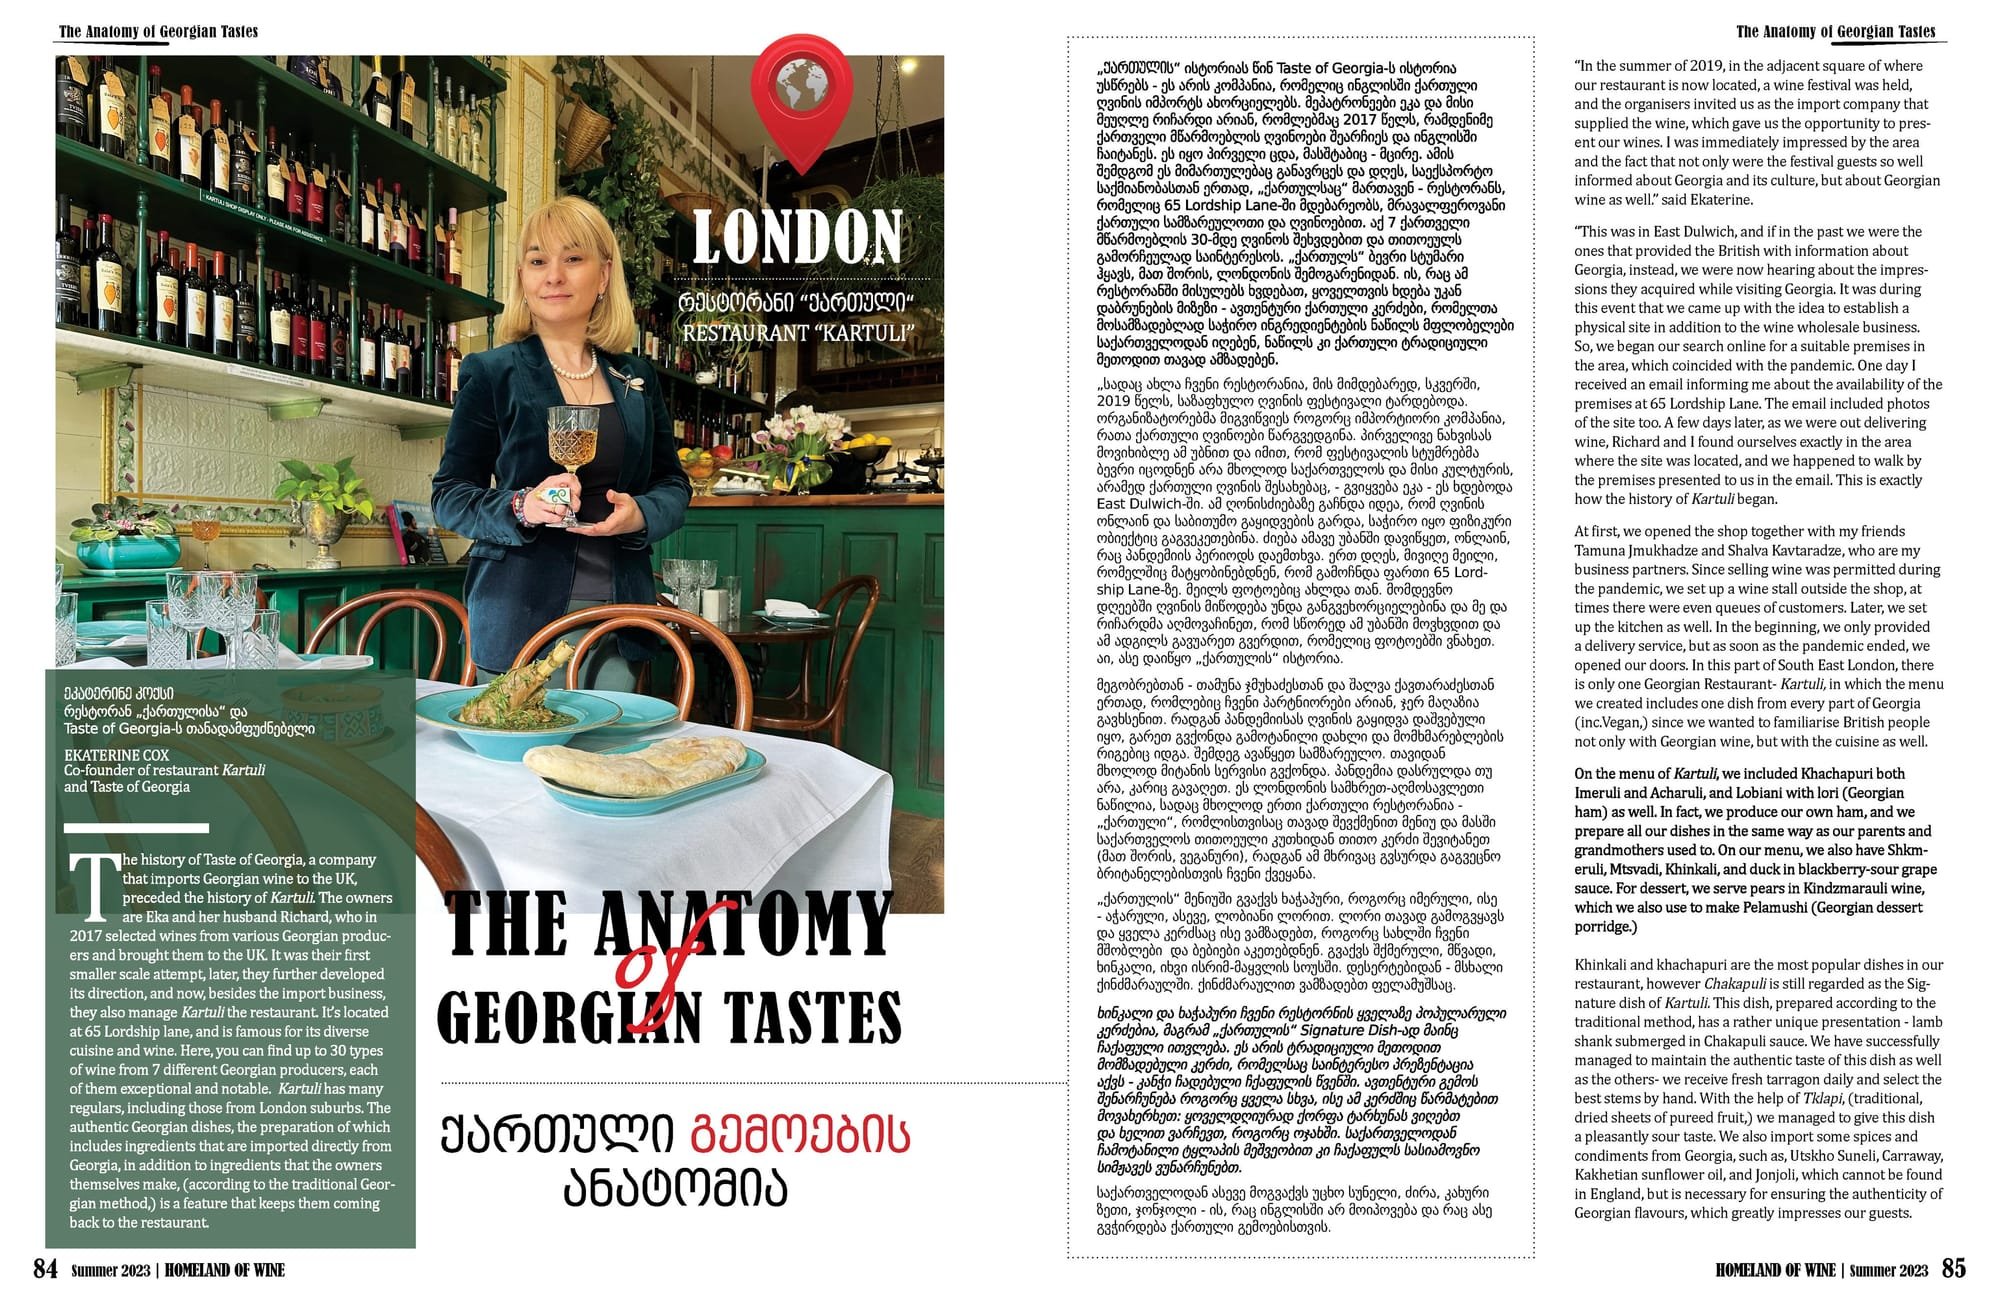 THE ANATOMY OF GEORGIAN TASTES | LONDON